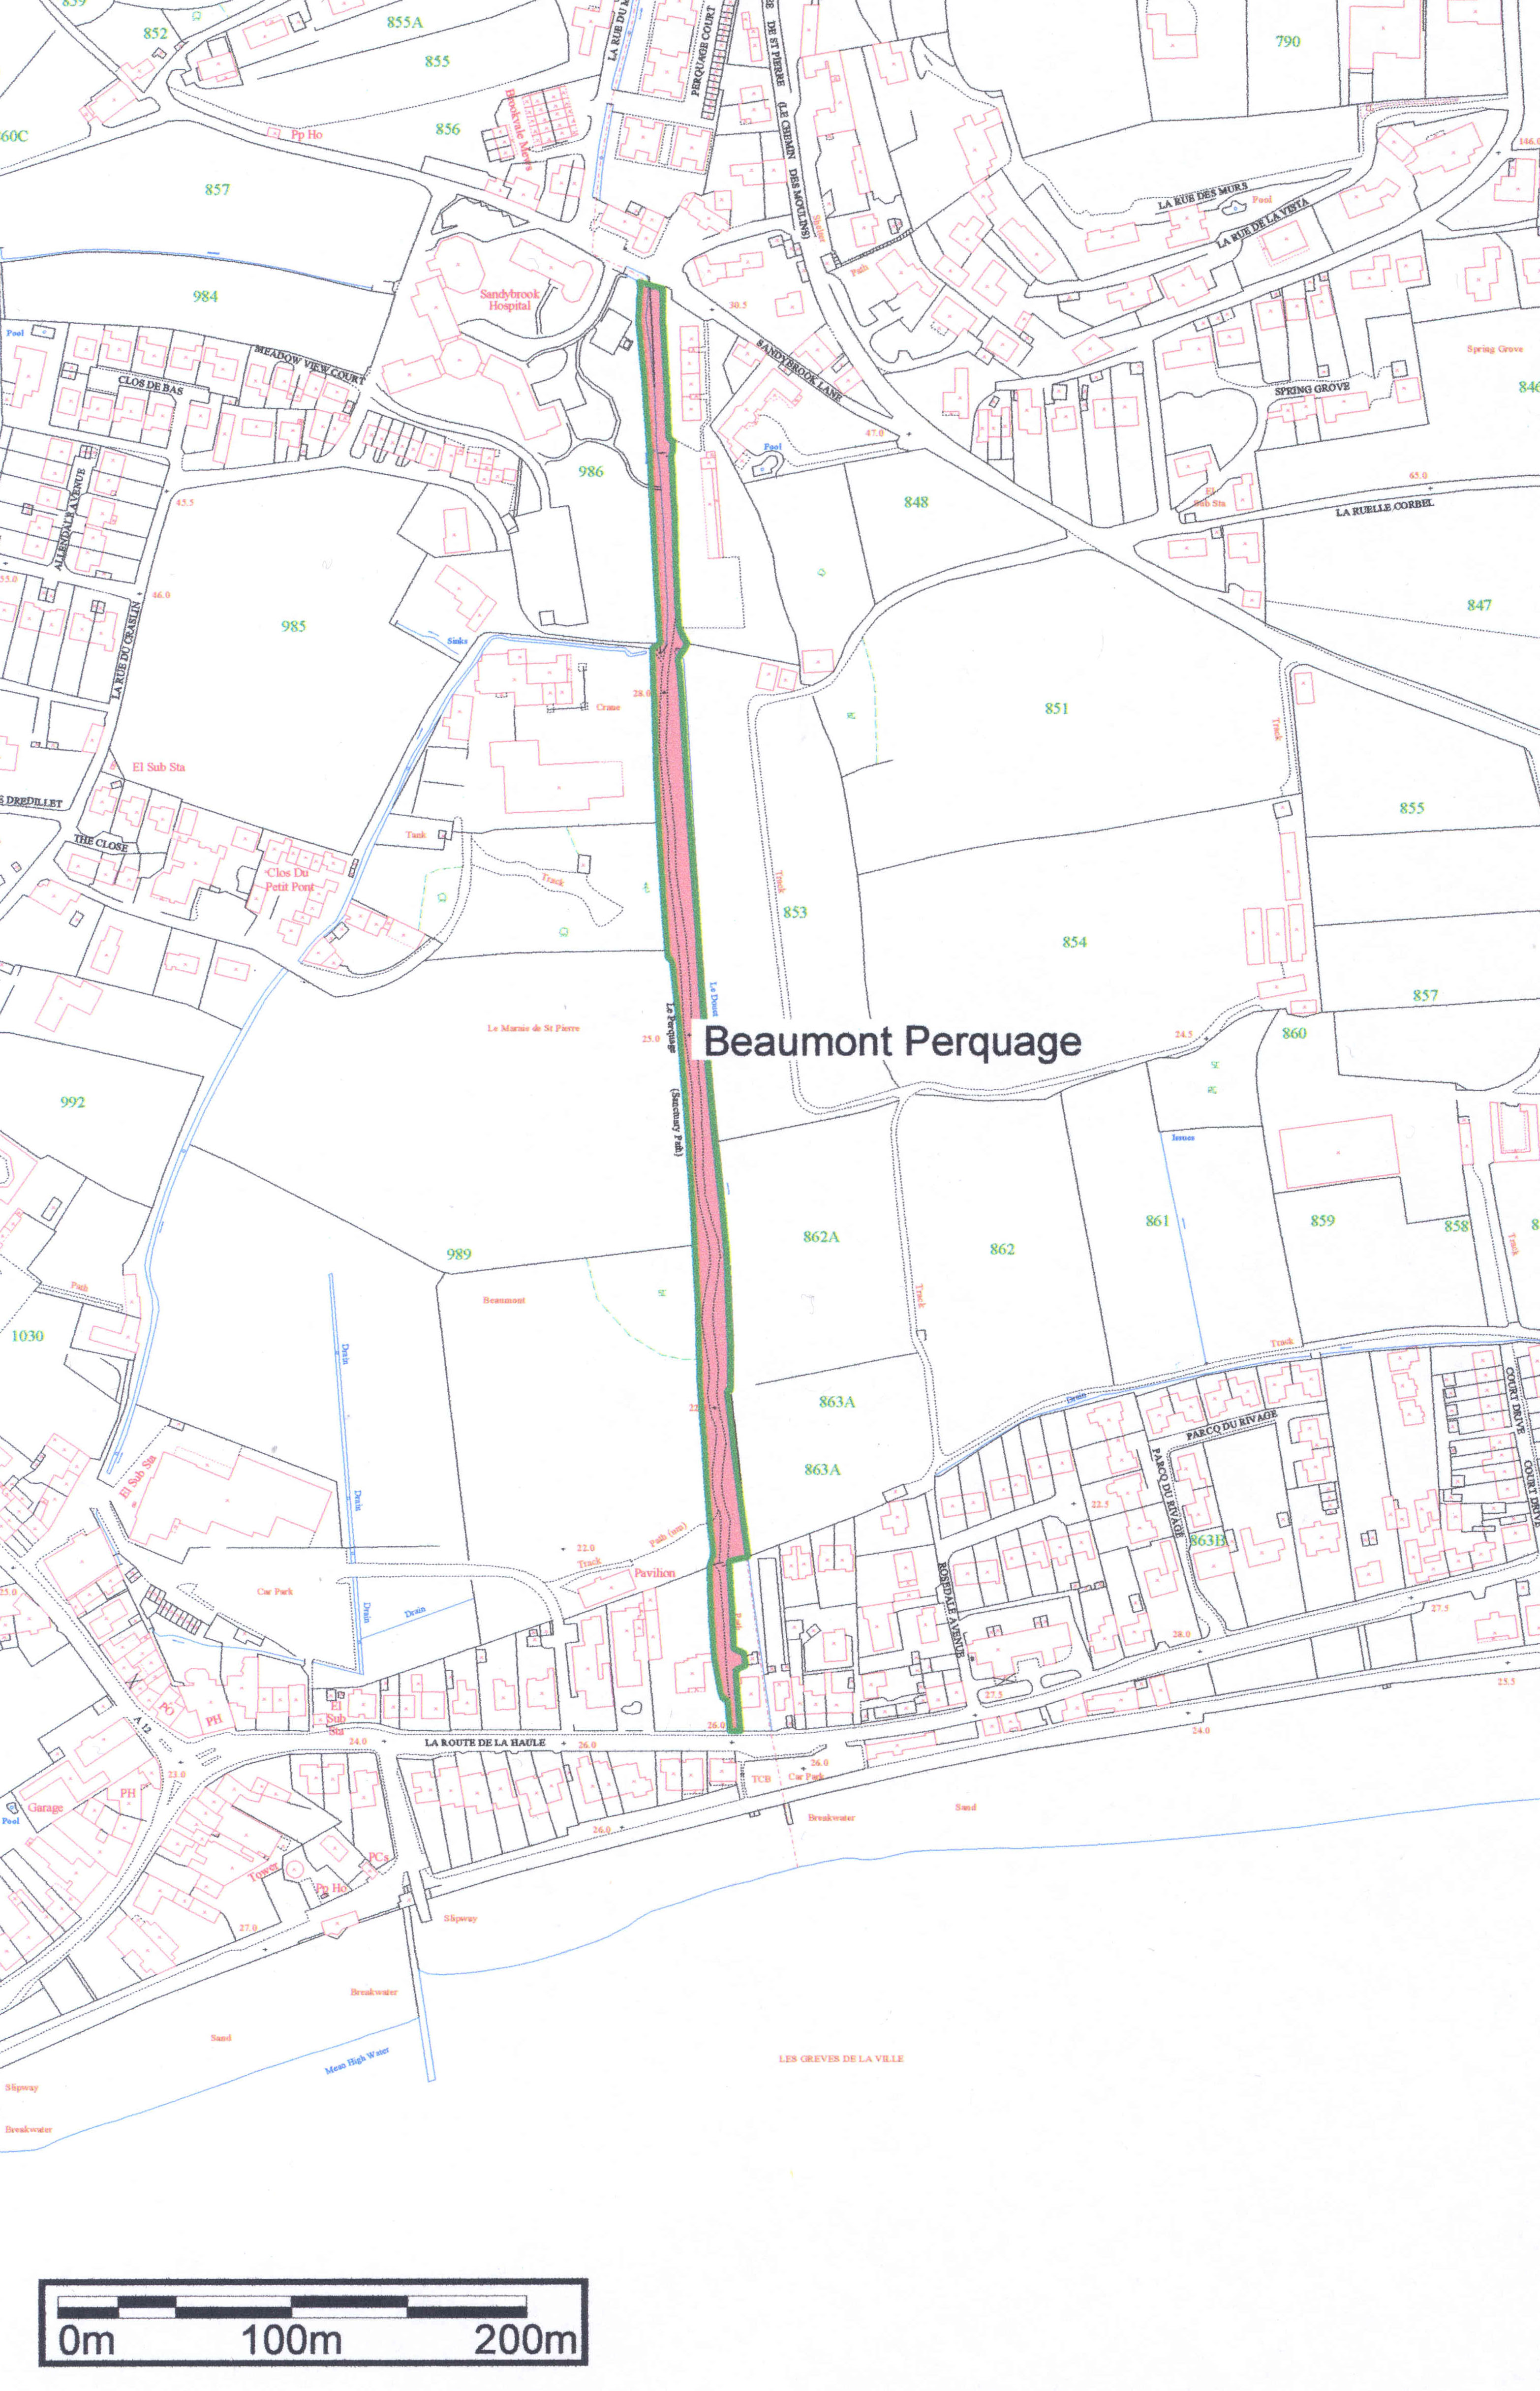 Part 4 - map of Beaumont Perquage